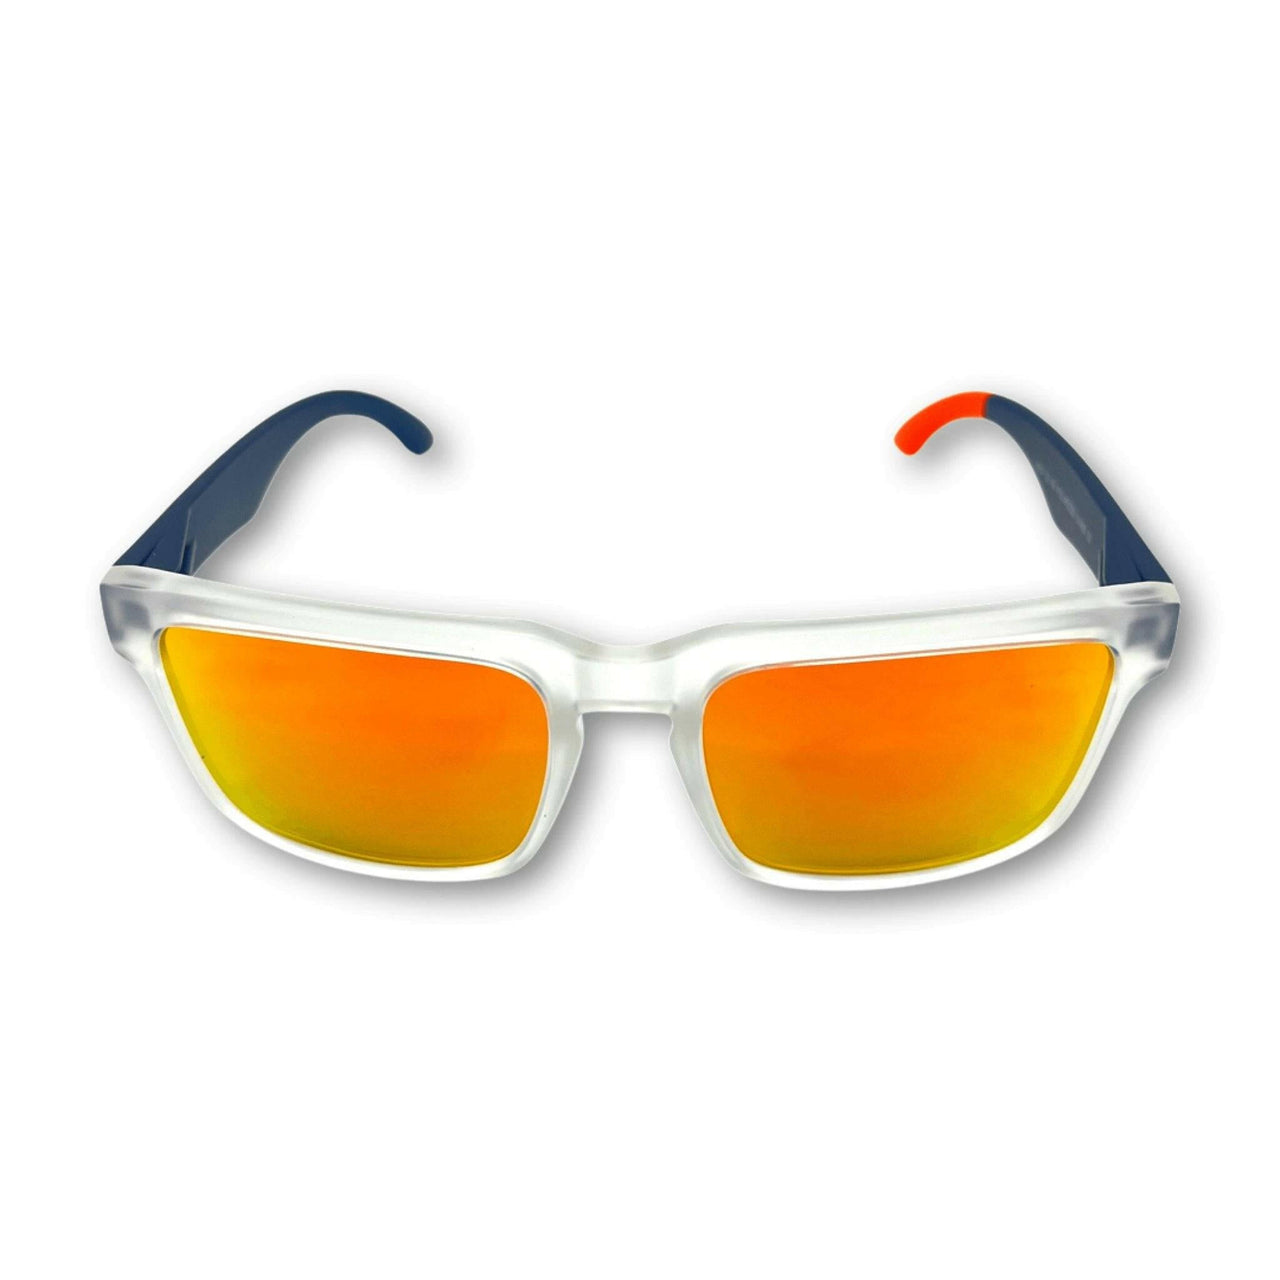 Hustler Orange Frosted Sunglasses - Rebel Reaper Clothing Company Sunglasses